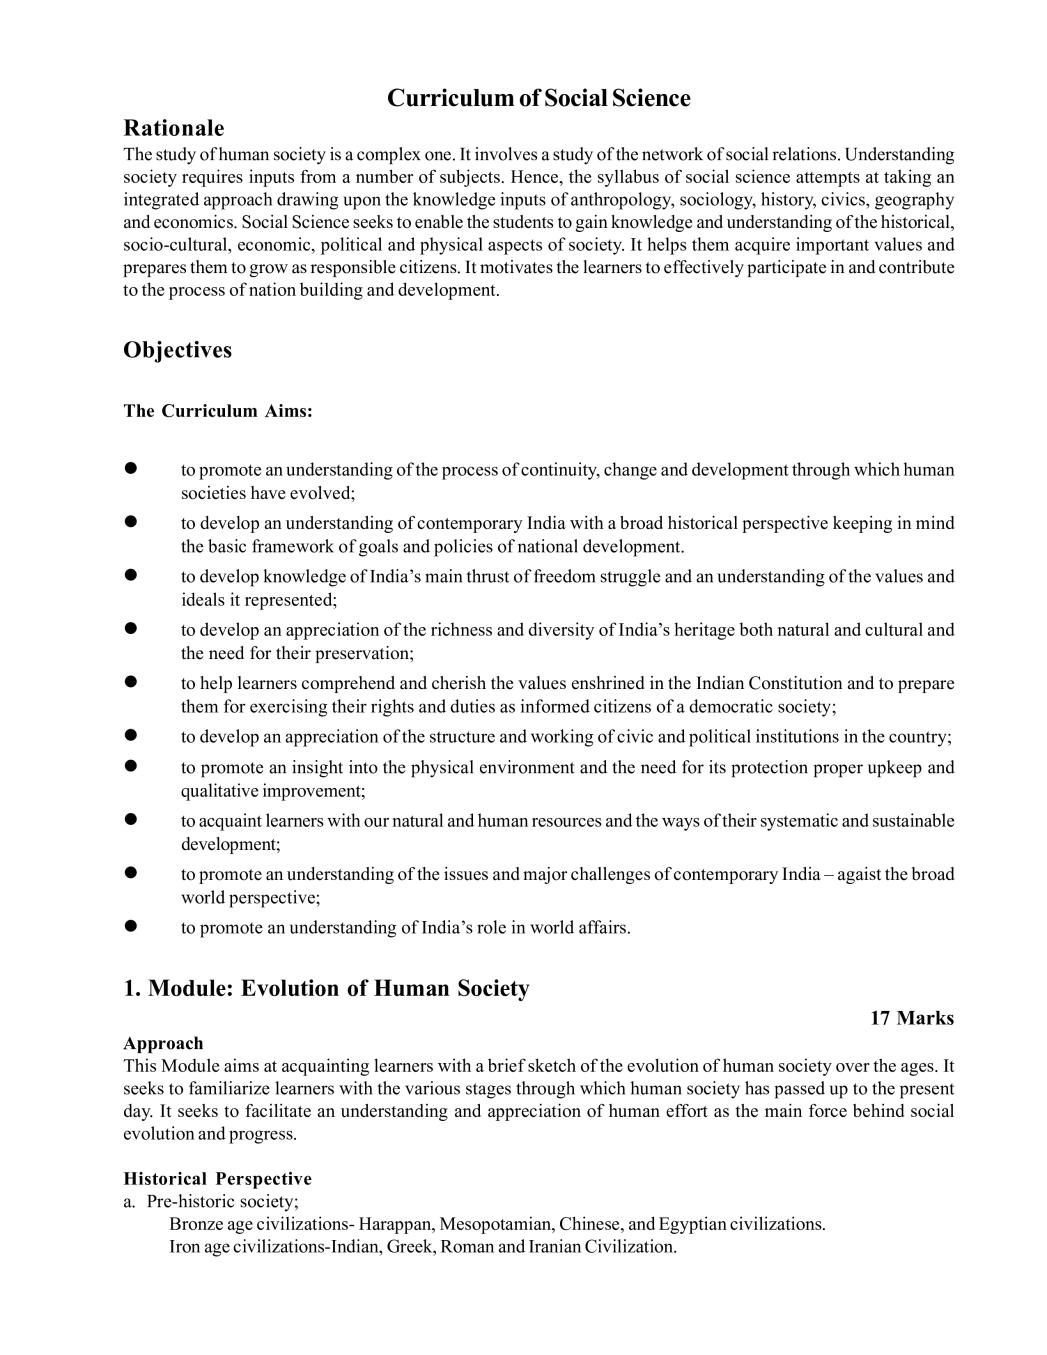 NIOS Class 10 Syllabus - Social Science - Page 1